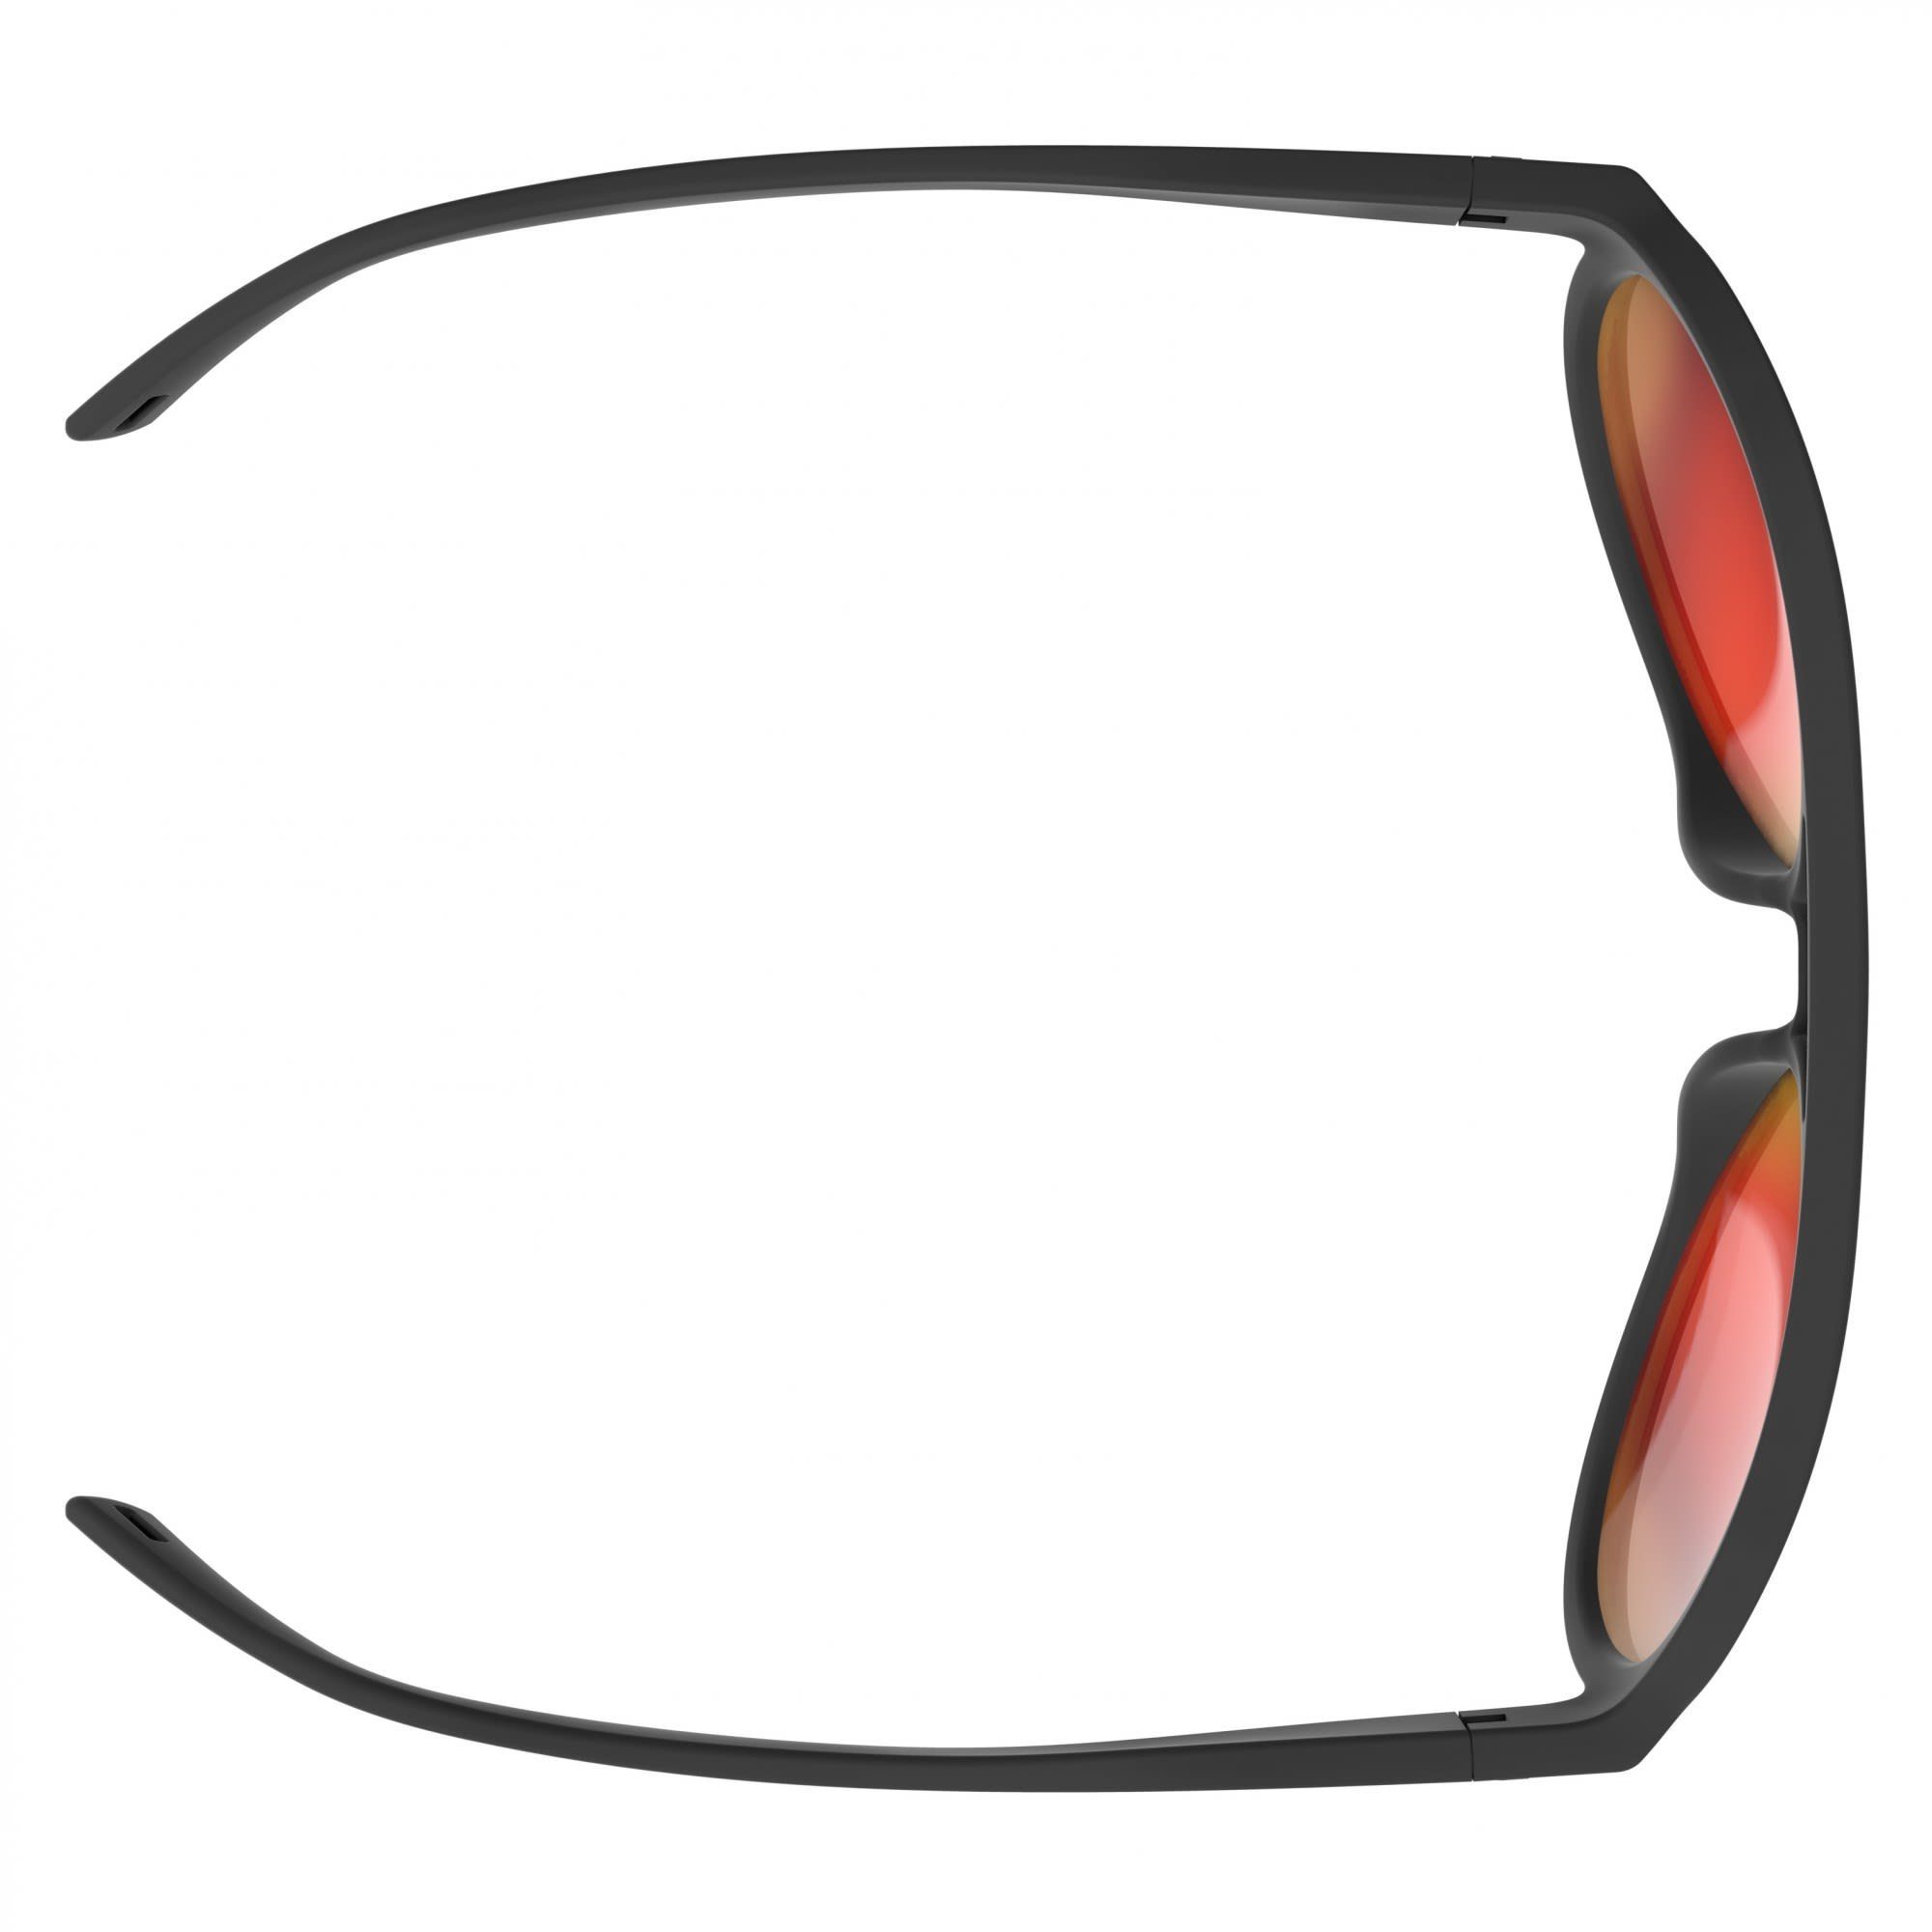 Scott Chrome Accessoires Sonnenbrille Scott - Sunglasses Black Bass Red